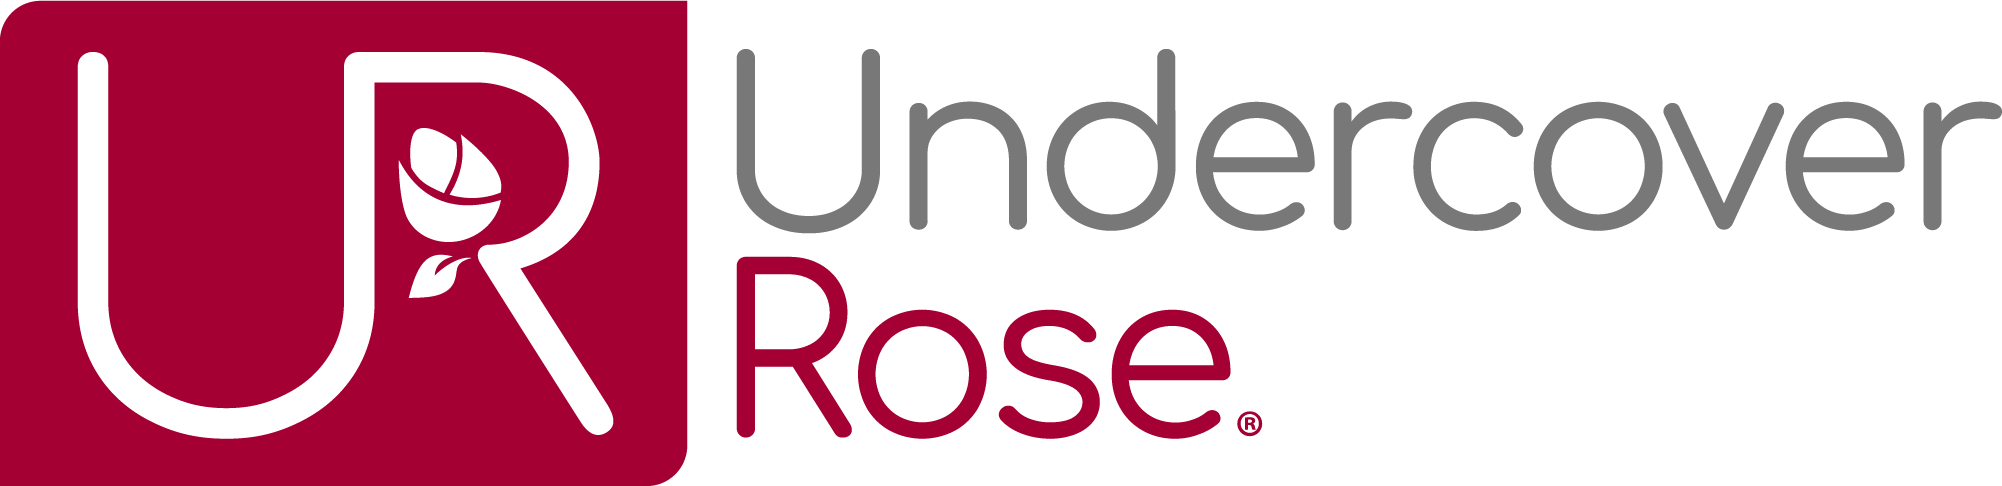 Undercover Rose